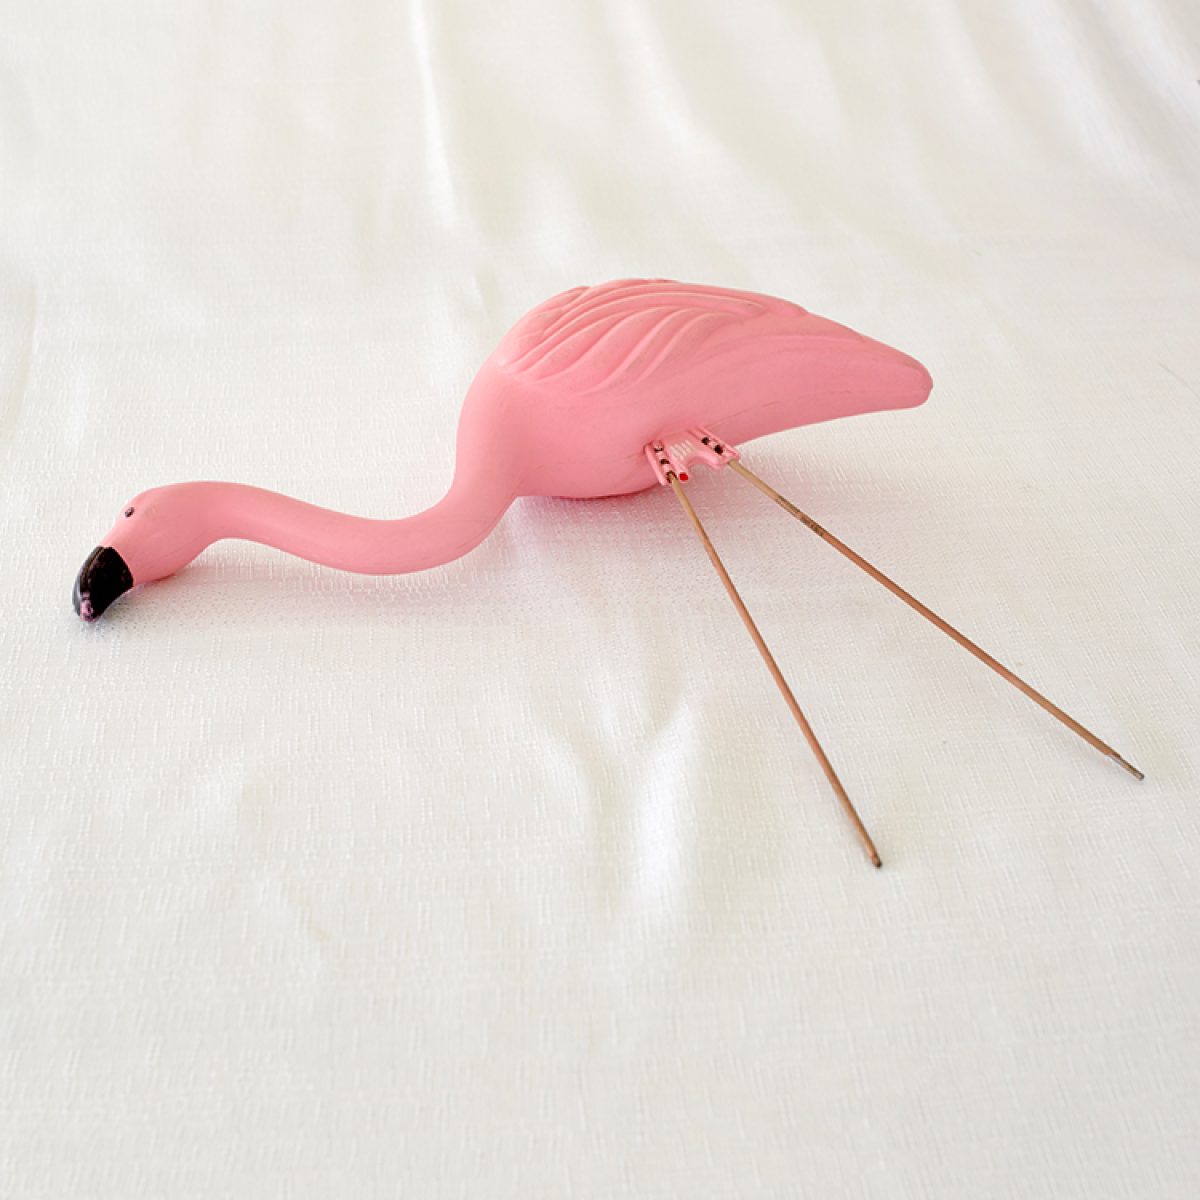 yard card flamingo with legs